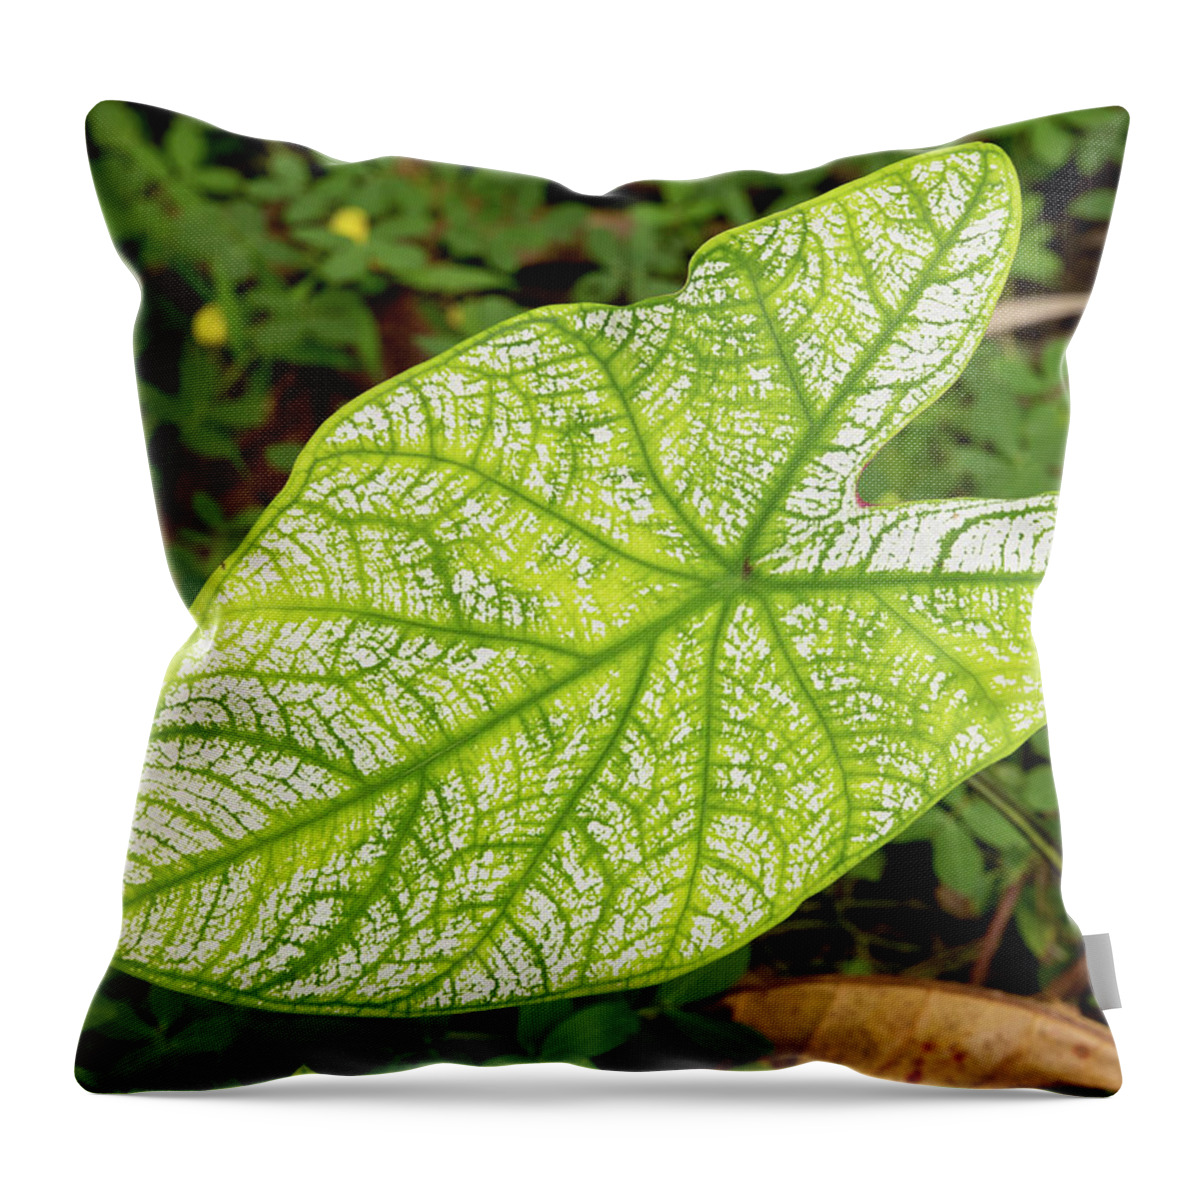 Dakak Philippines Throw Pillow featuring the photograph Large Caladium Leaf by David Desautel